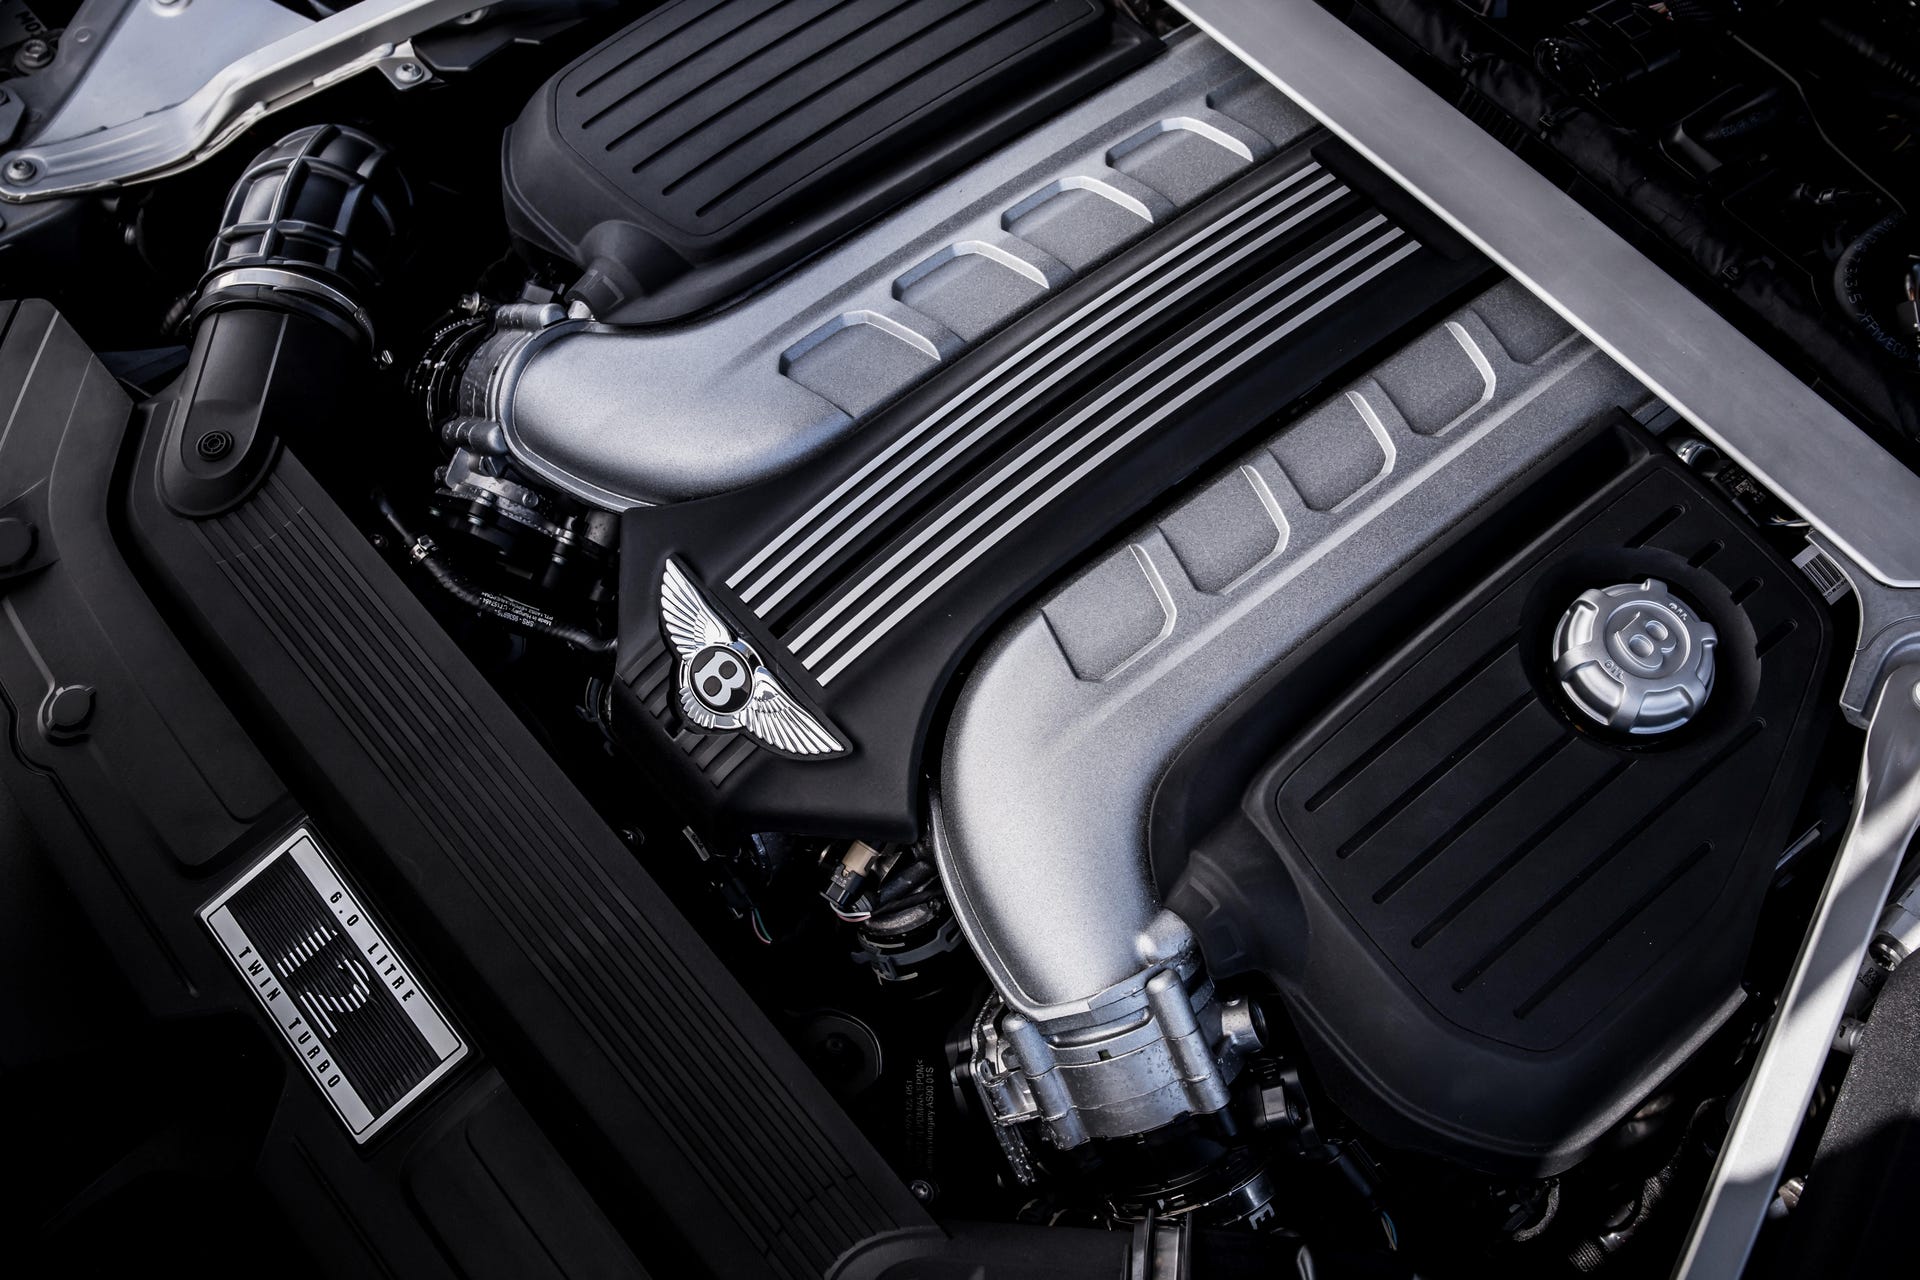 Bentley Continental GT W12 engine